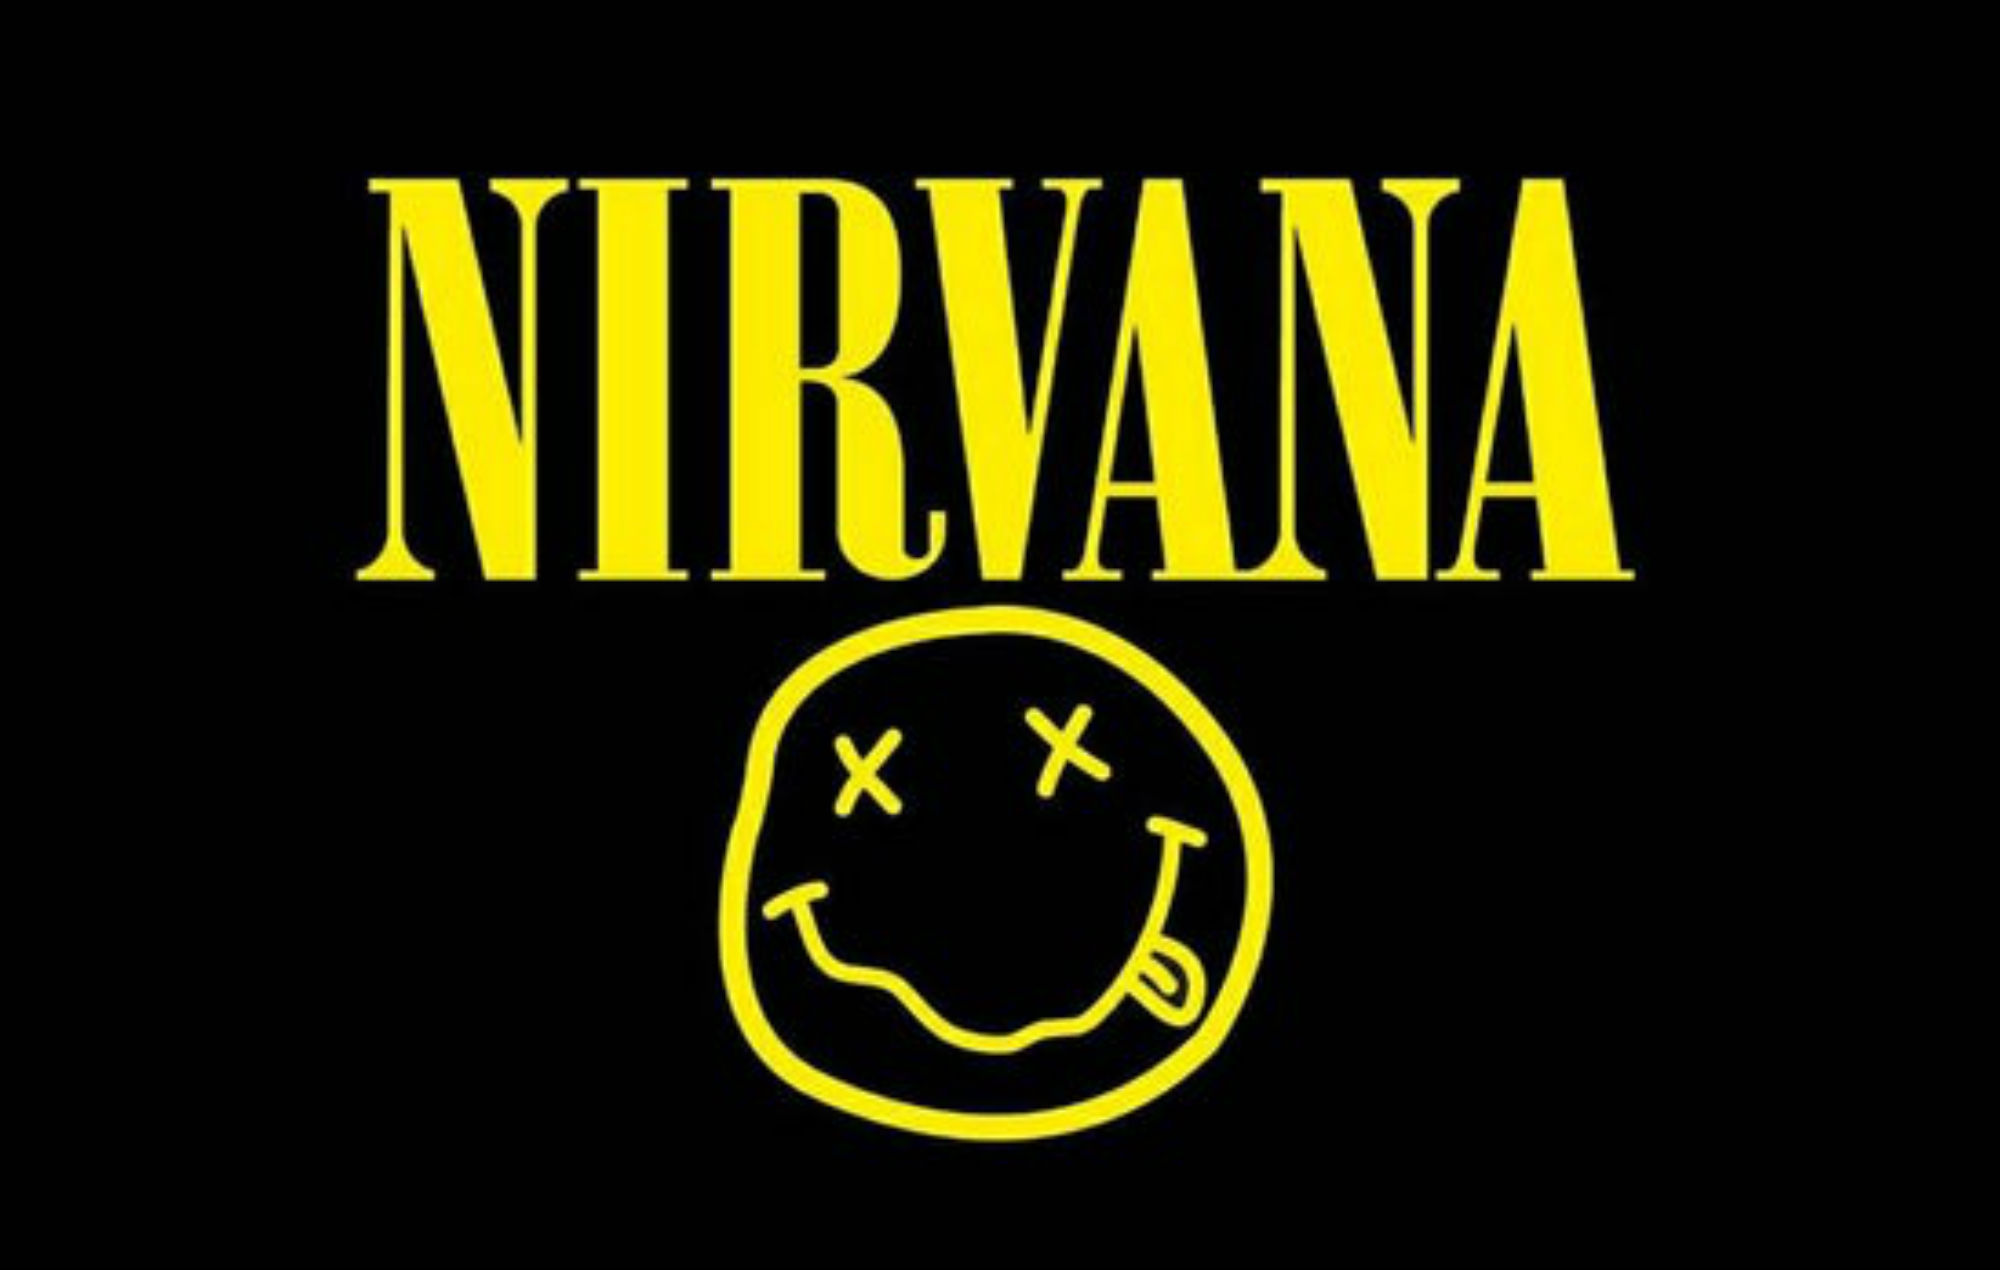 El artista presenta una demanda después de afirmar que se le ocurrió el logo de Nirvana 